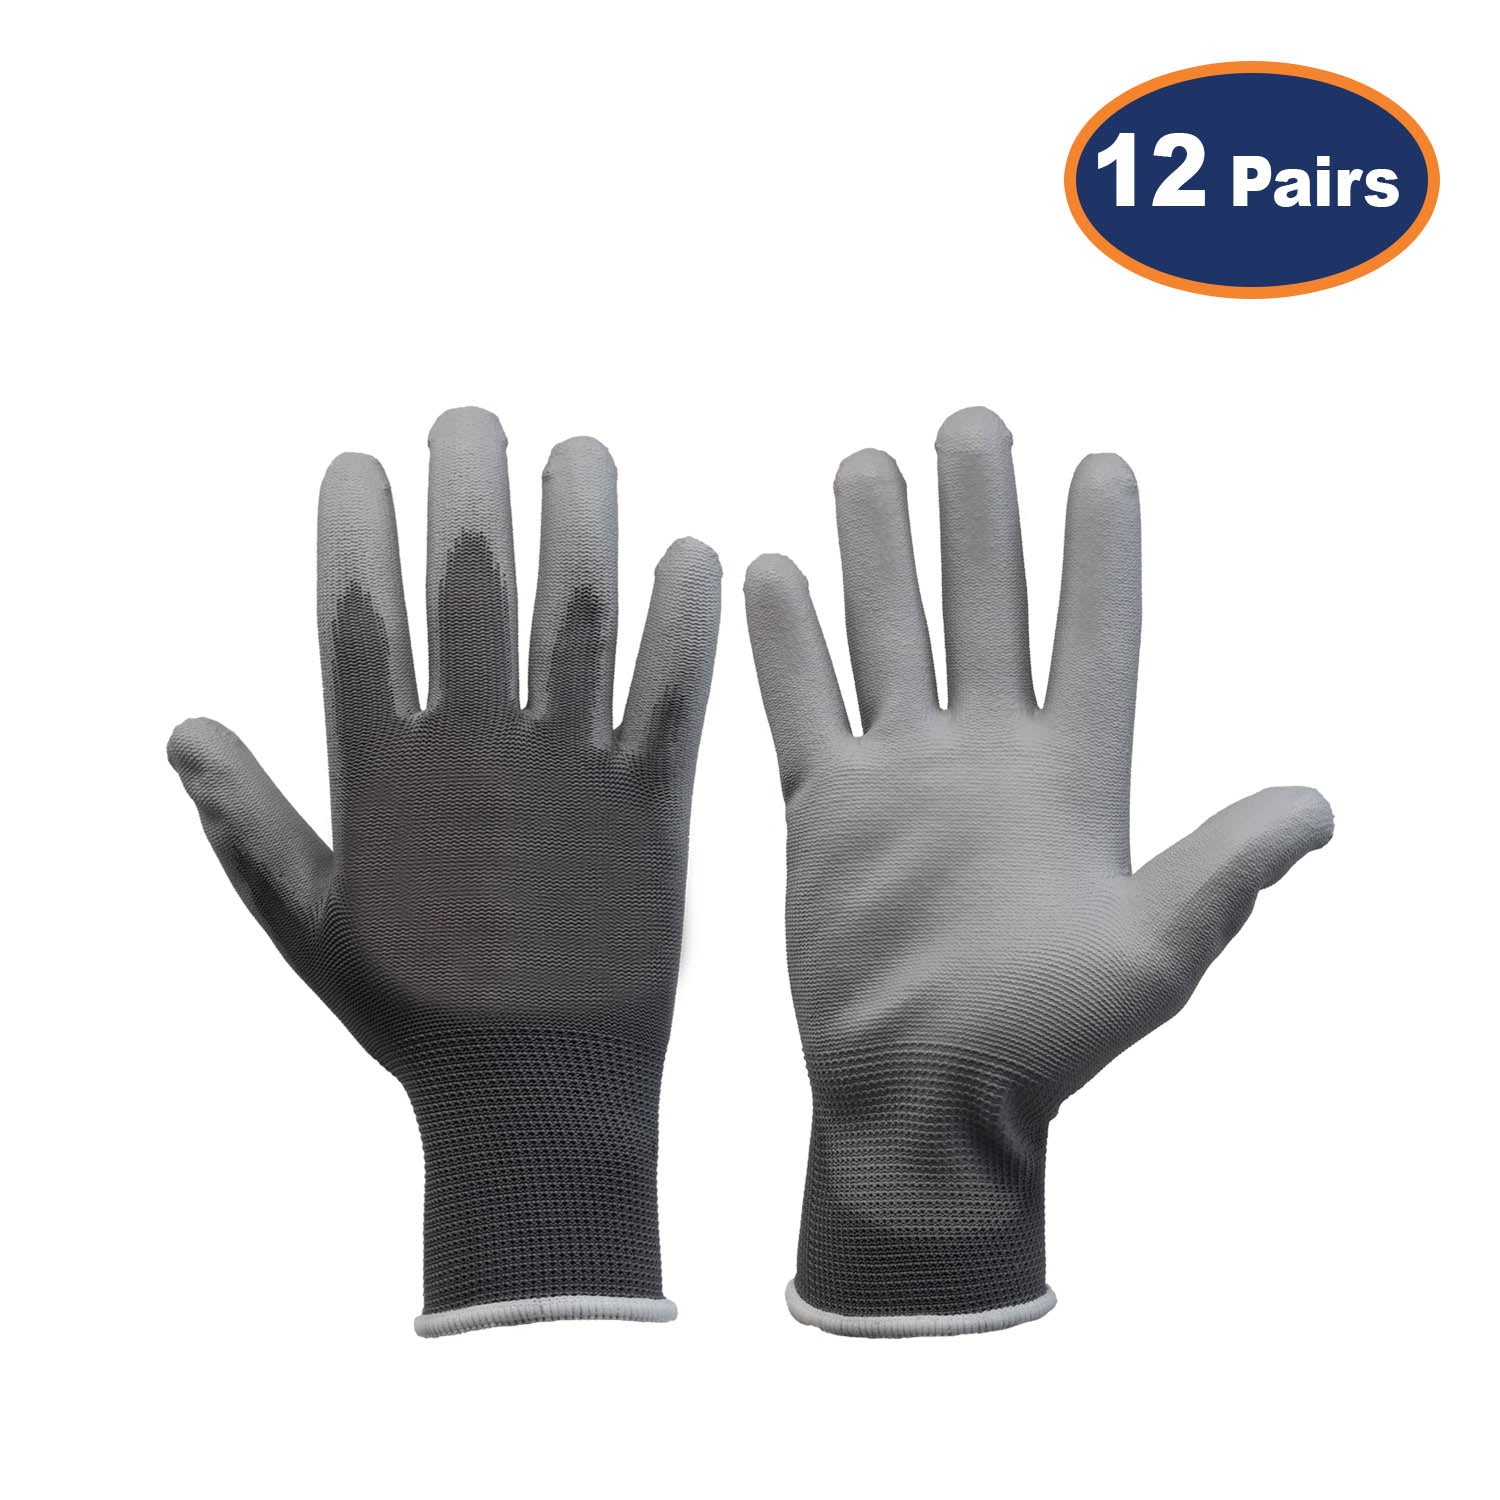 12Pcs Large Size PU Palm Grey Safety Glove